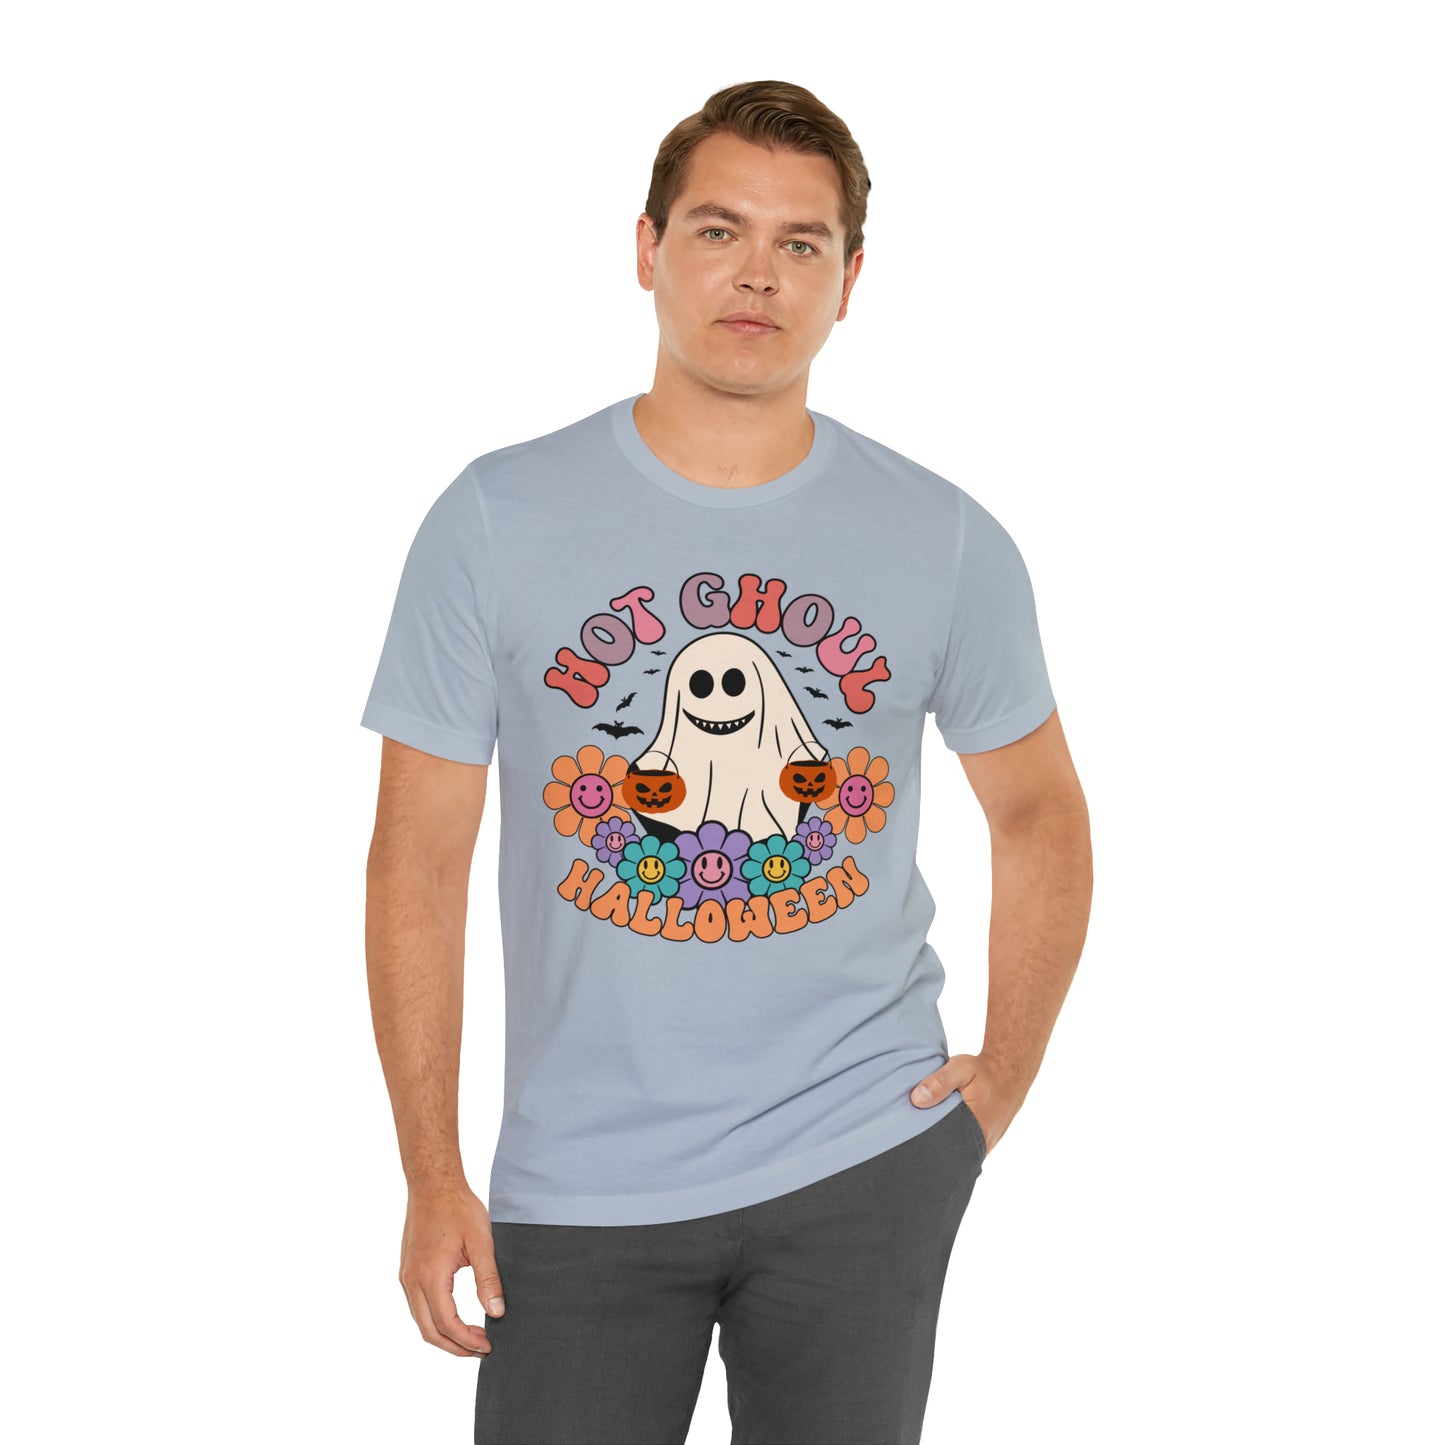 Lets Go Ghouls Shirt, Spooky Season Tee, Retro Halloween Cowgirl Shirt, Cowgirl Halloween Shirt, Vintage Ghost Shirt, T770